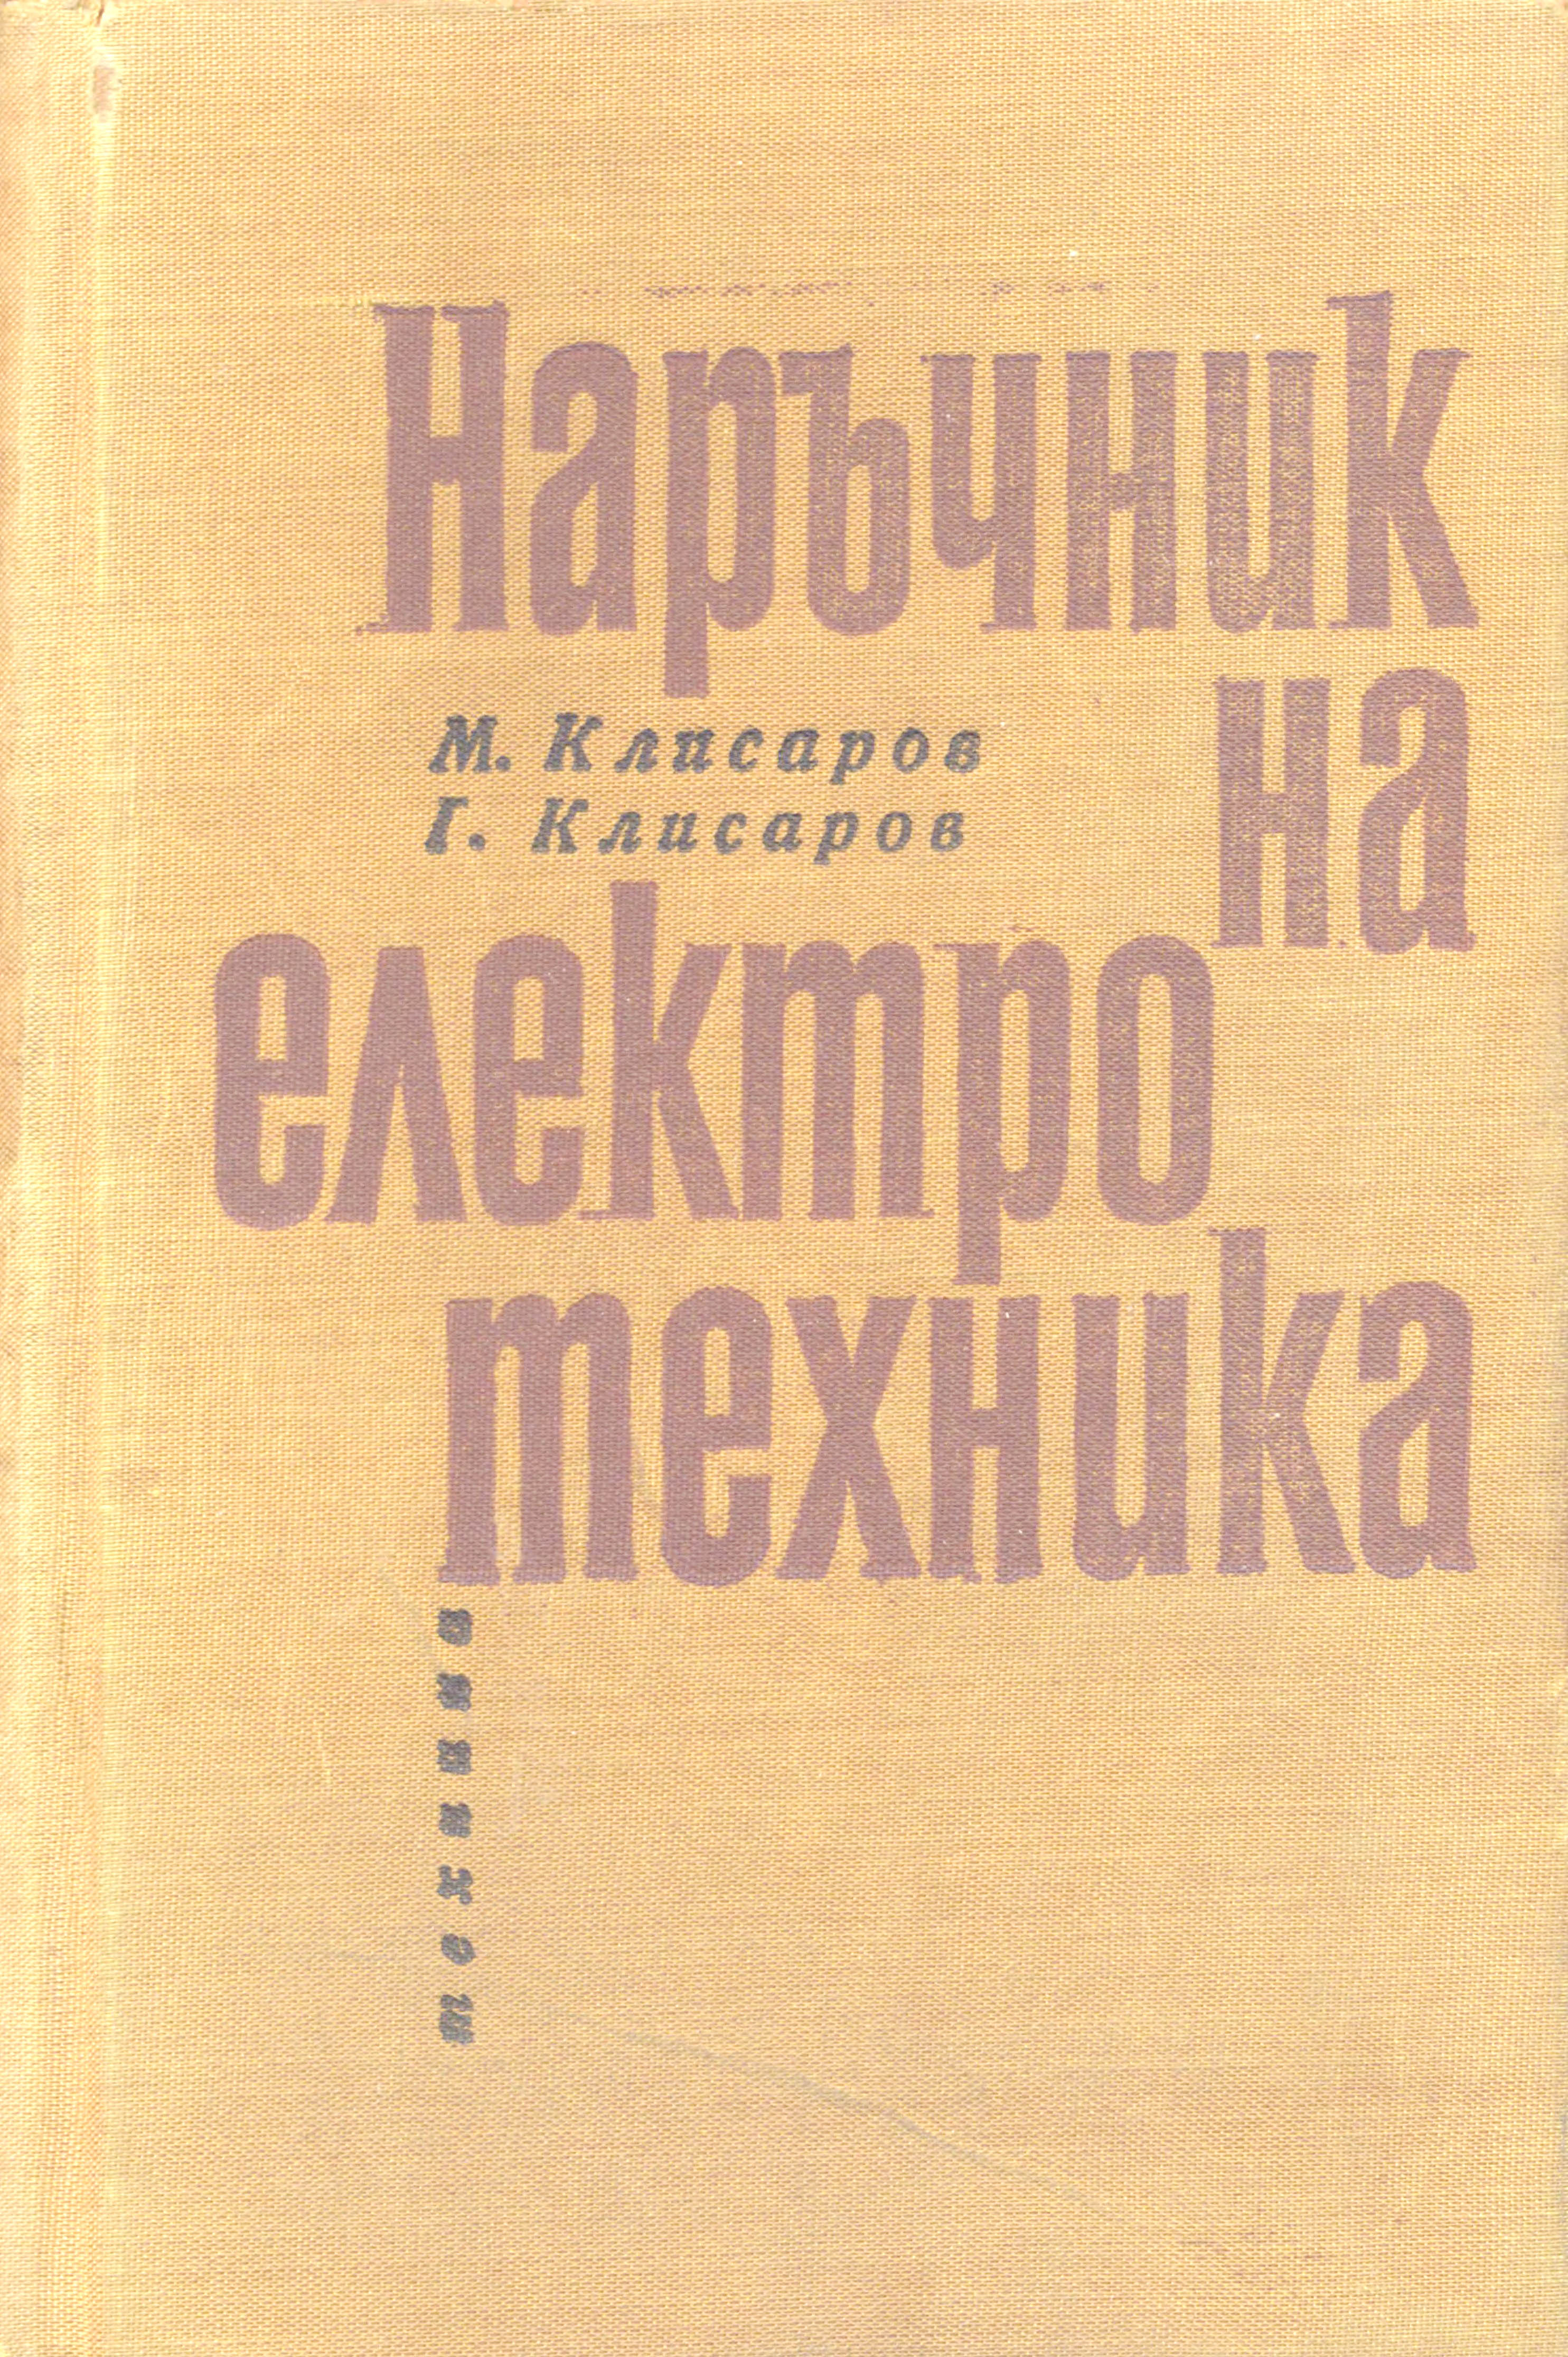 [1966] Наръчник на електротехника (Клисаров)